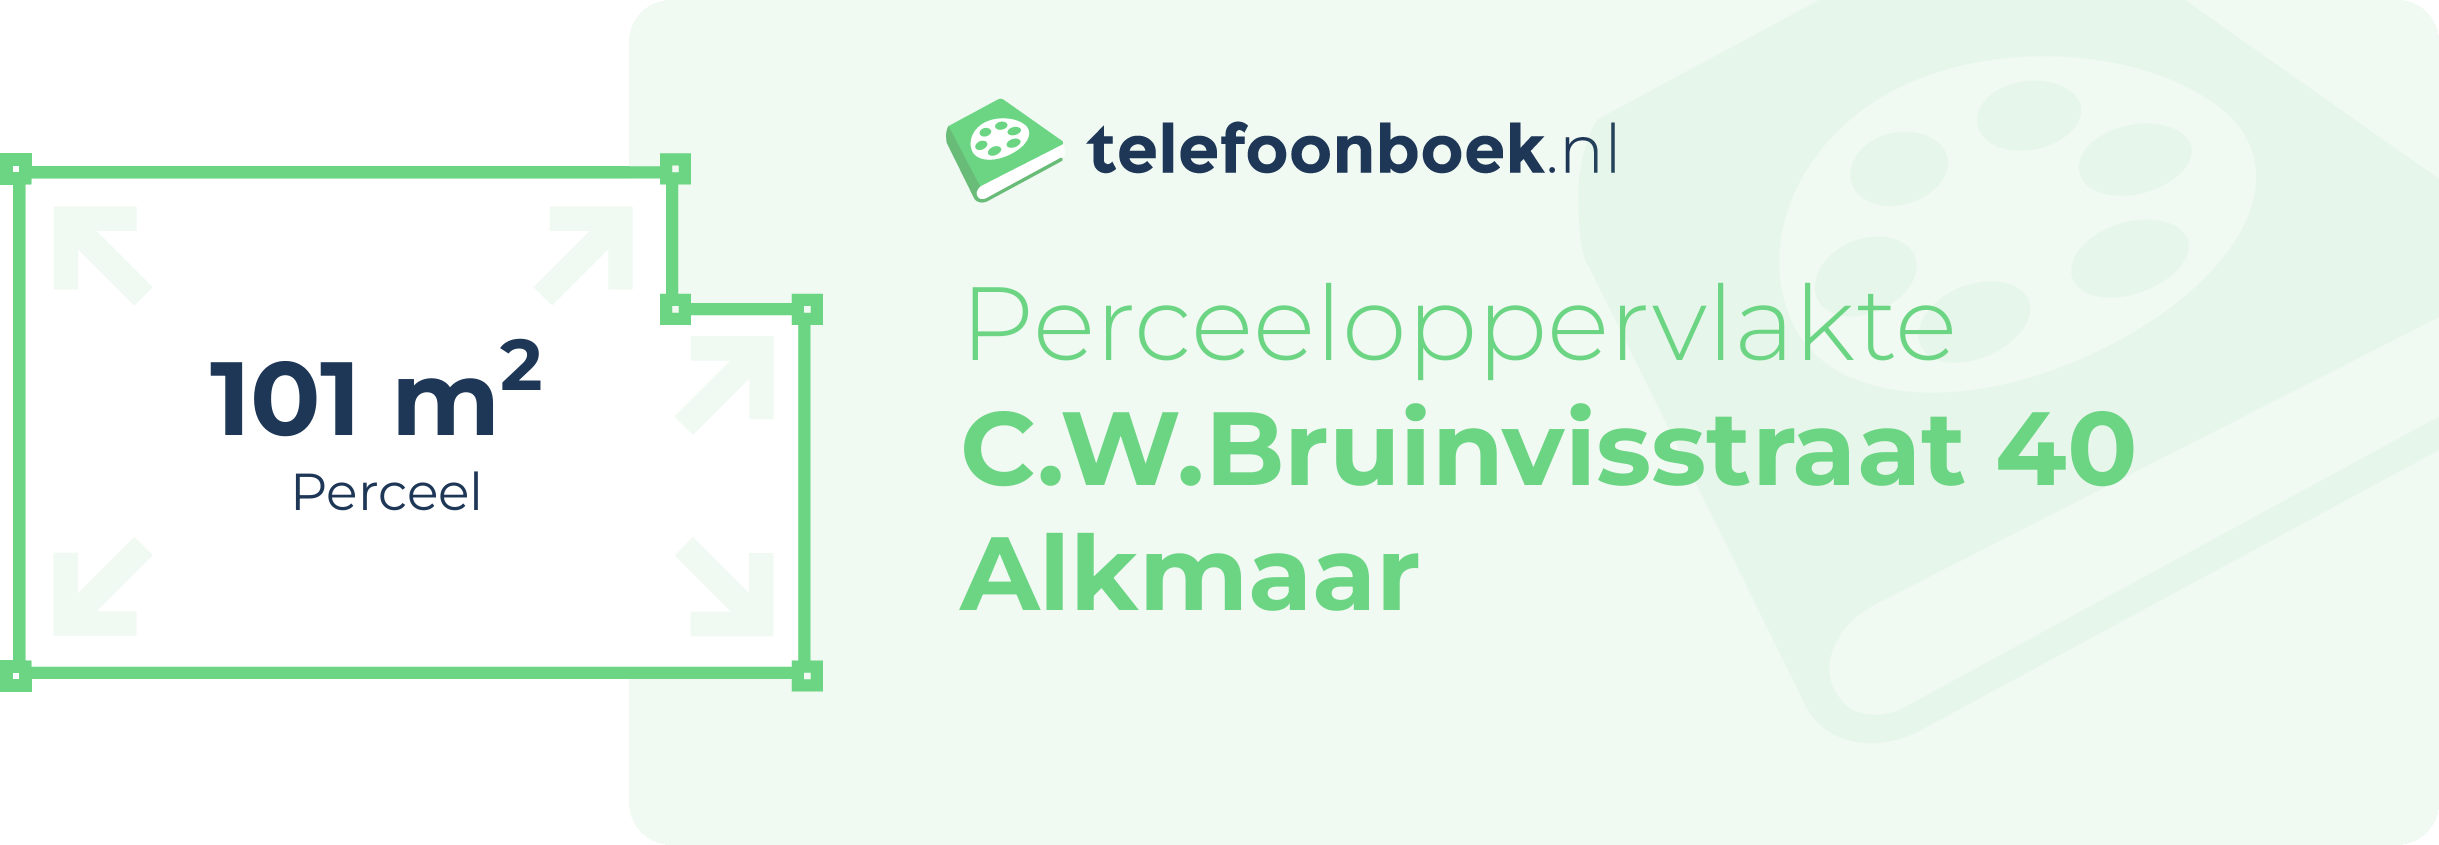 Perceeloppervlakte C.W.Bruinvisstraat 40 Alkmaar